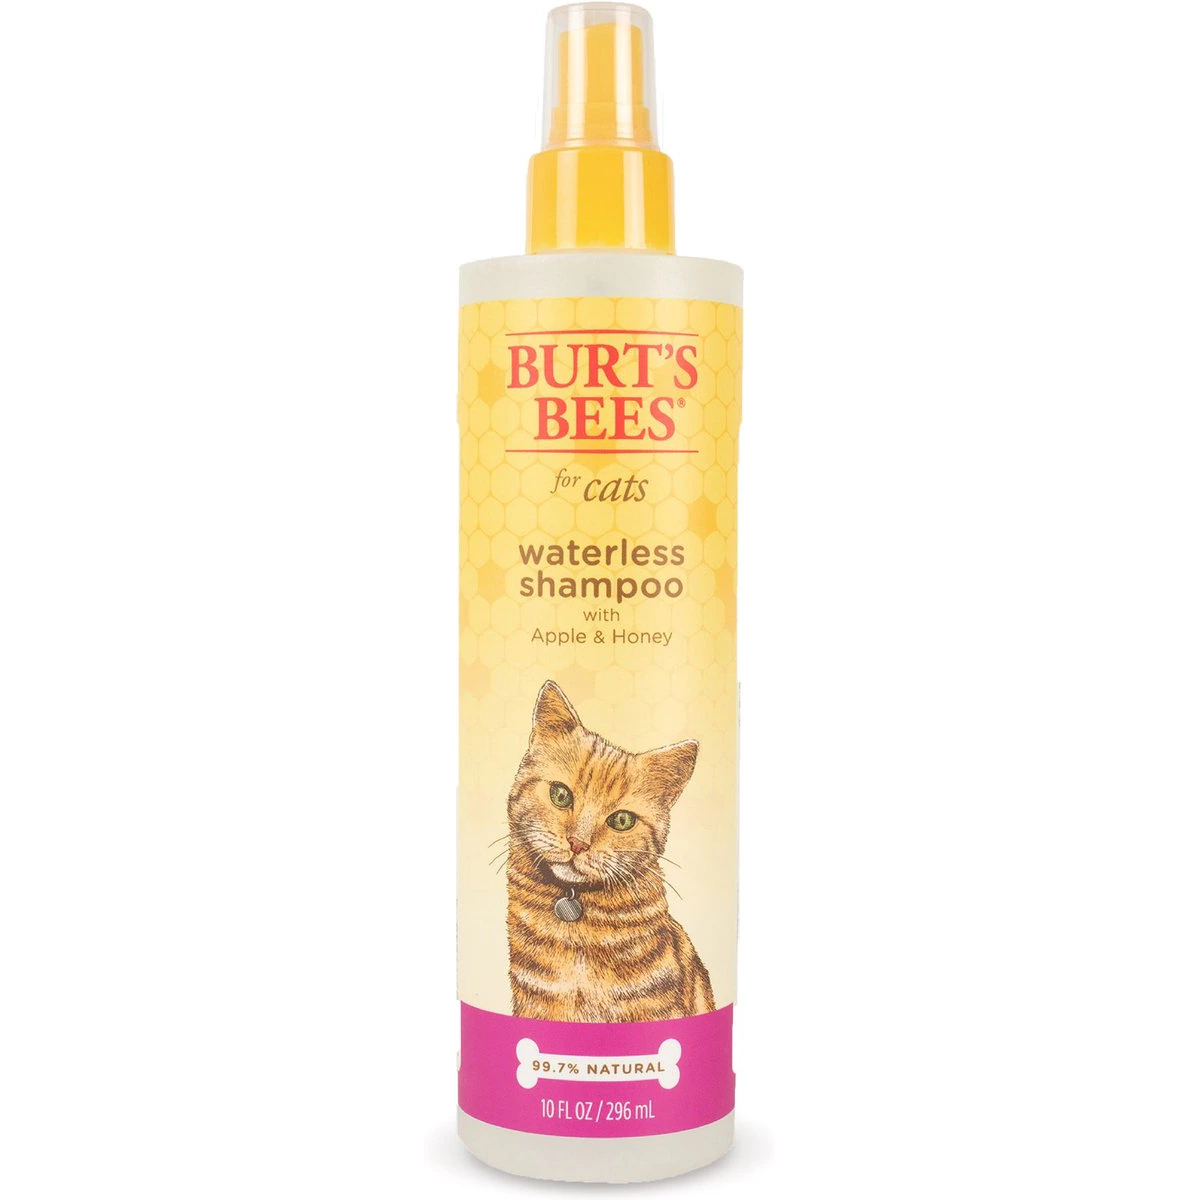 Burt's Bees Waterless Shampoo for Cats